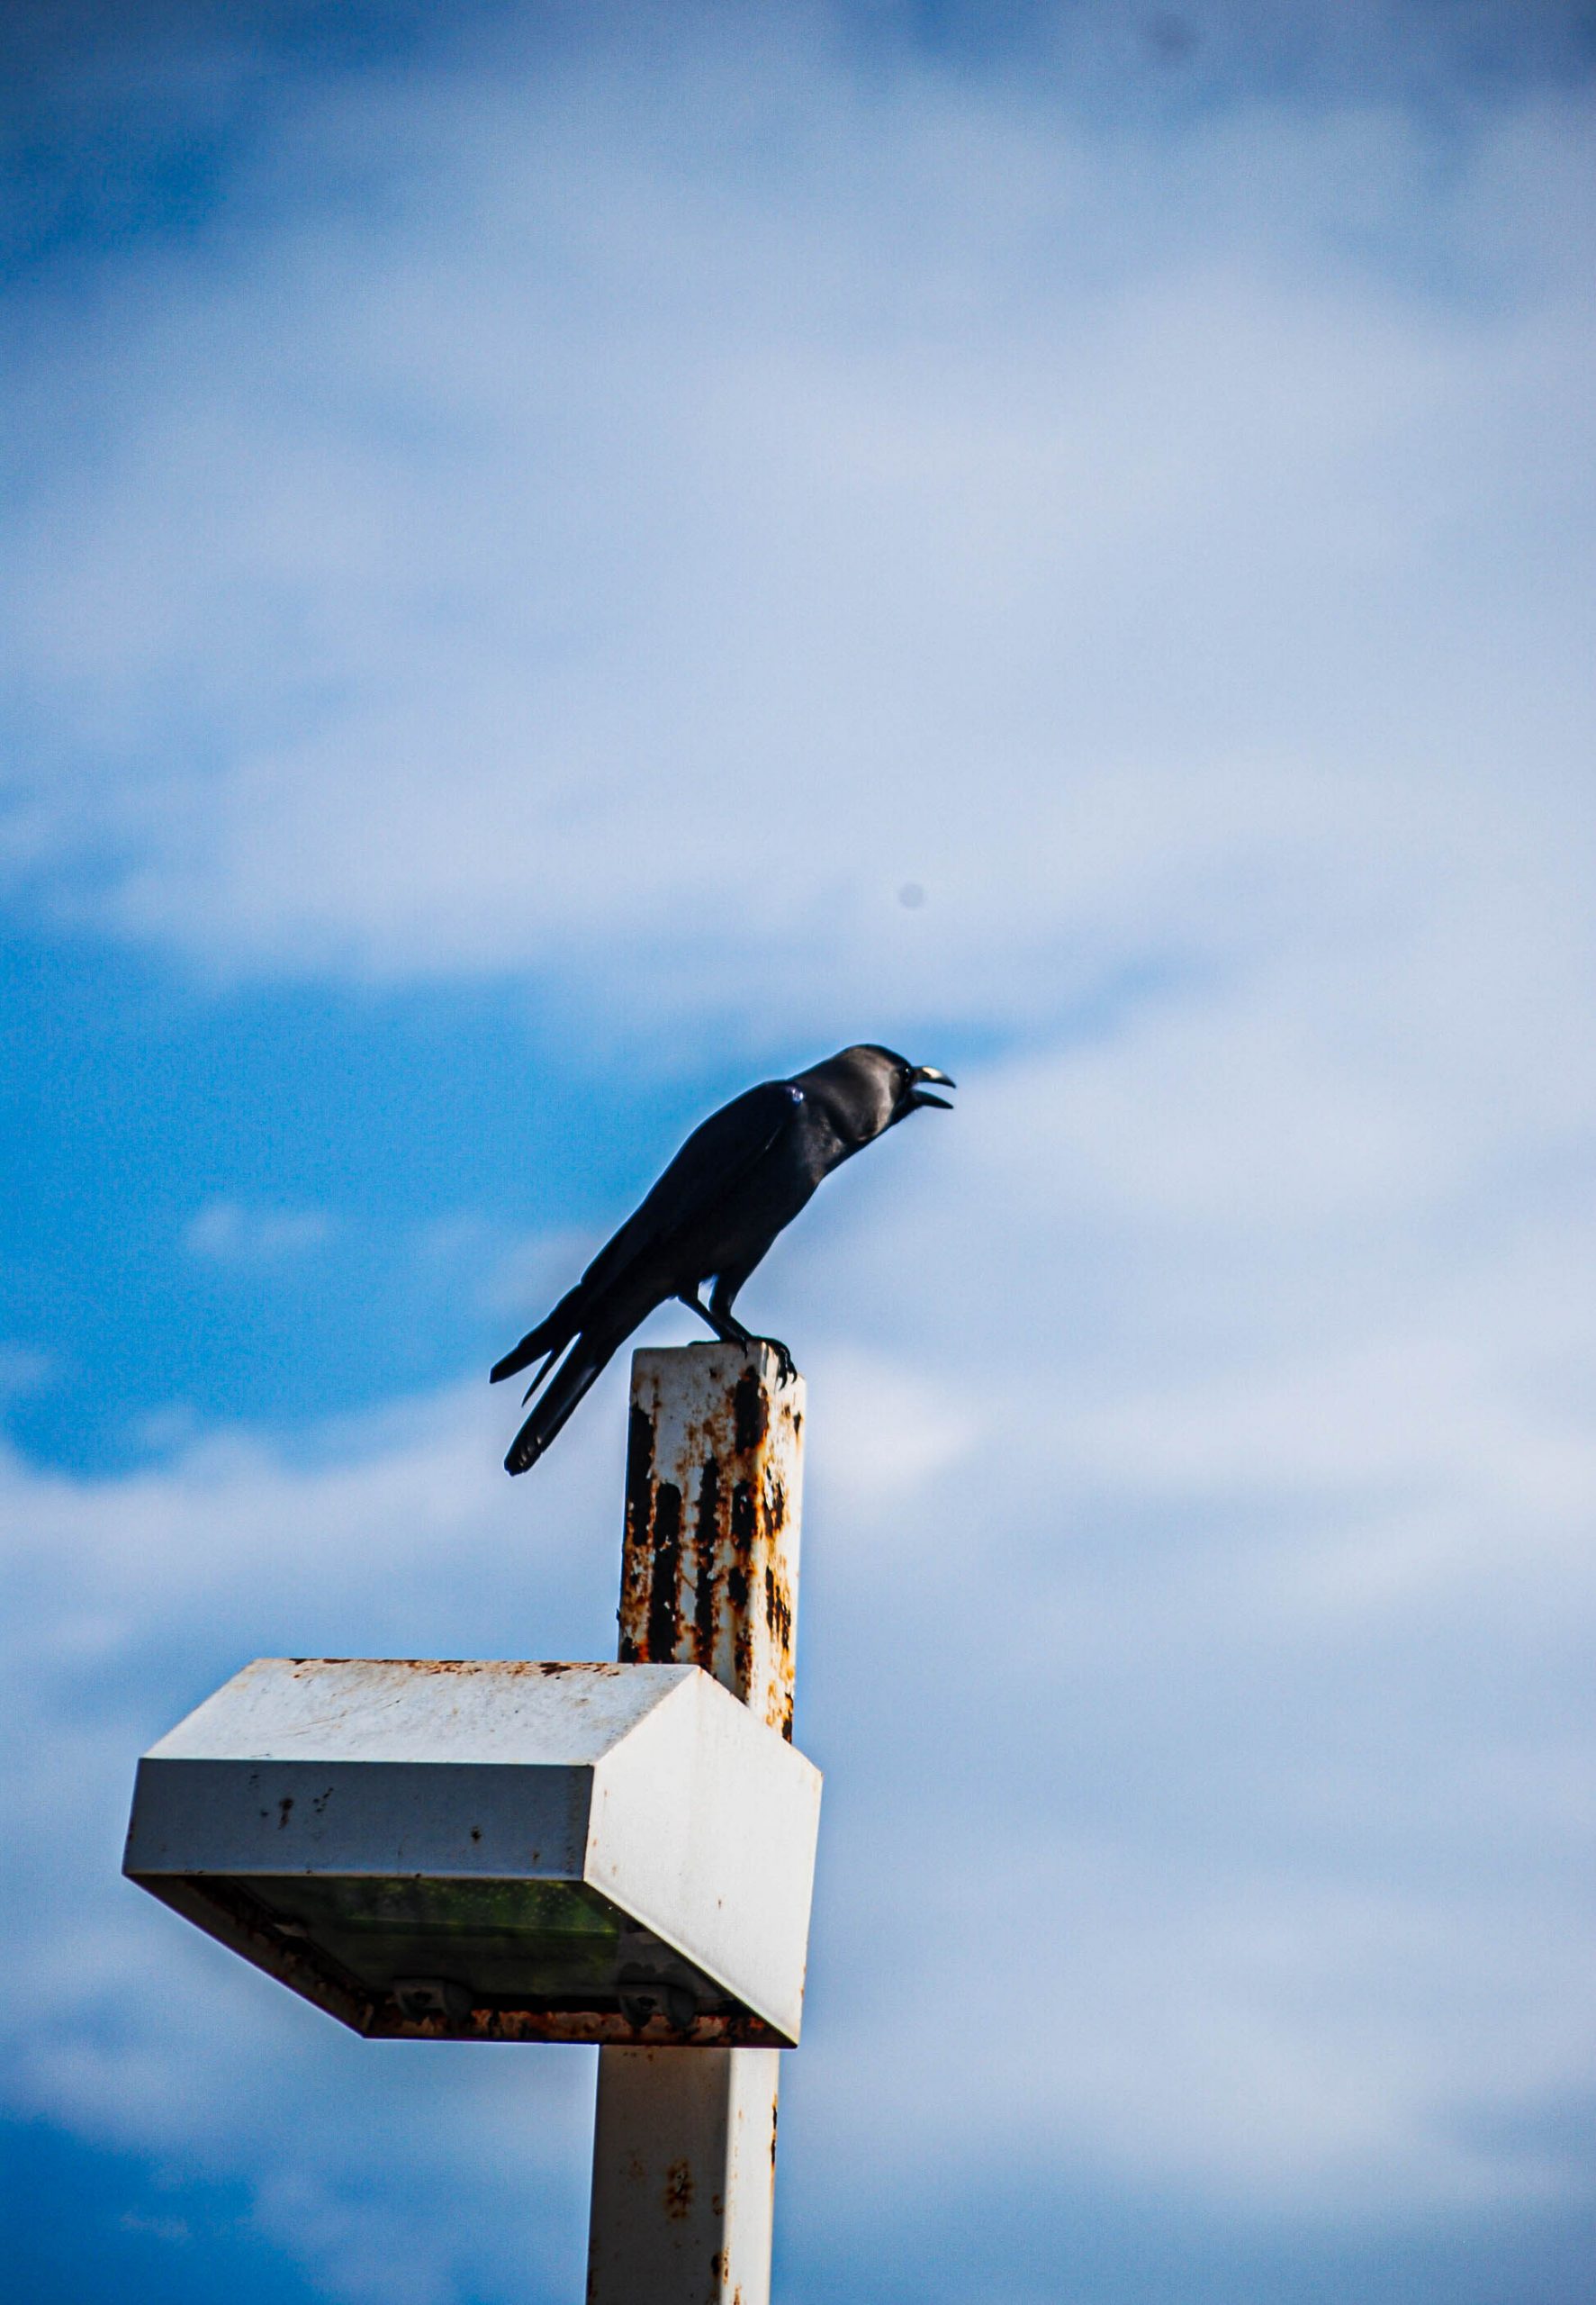 A crow on an electric pole